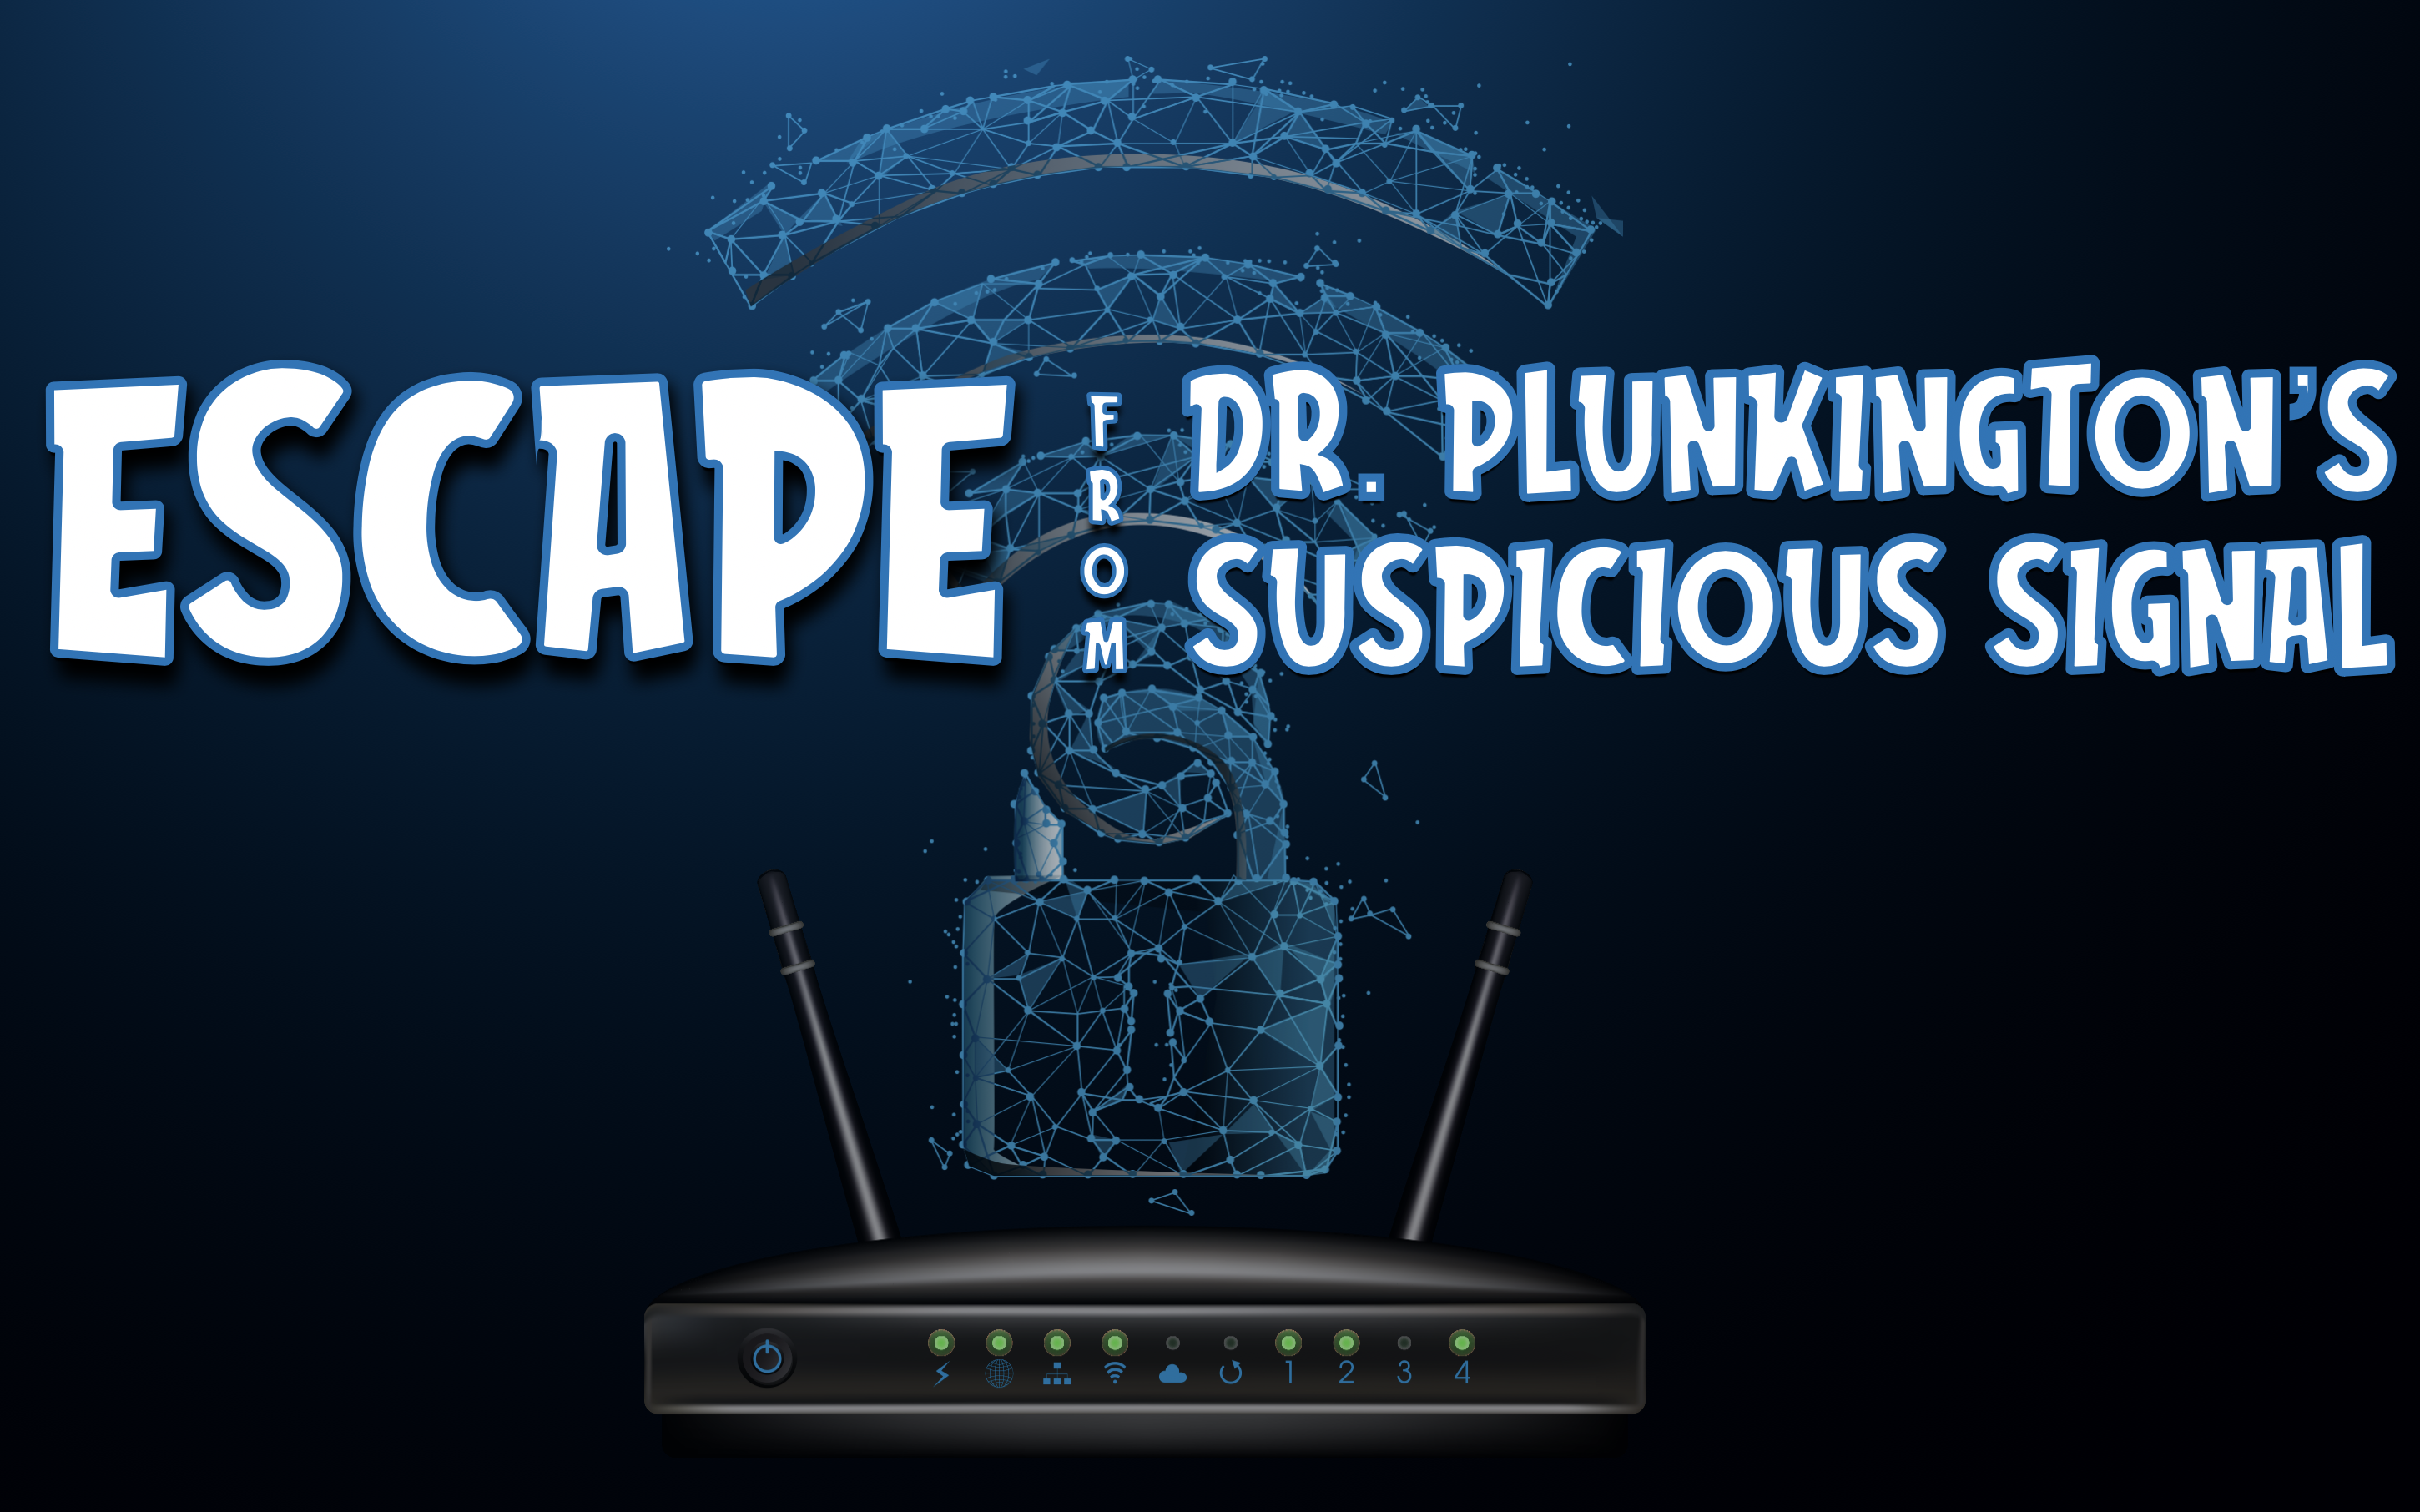 Escape from Dr. Plunkington's Suspicious Signal